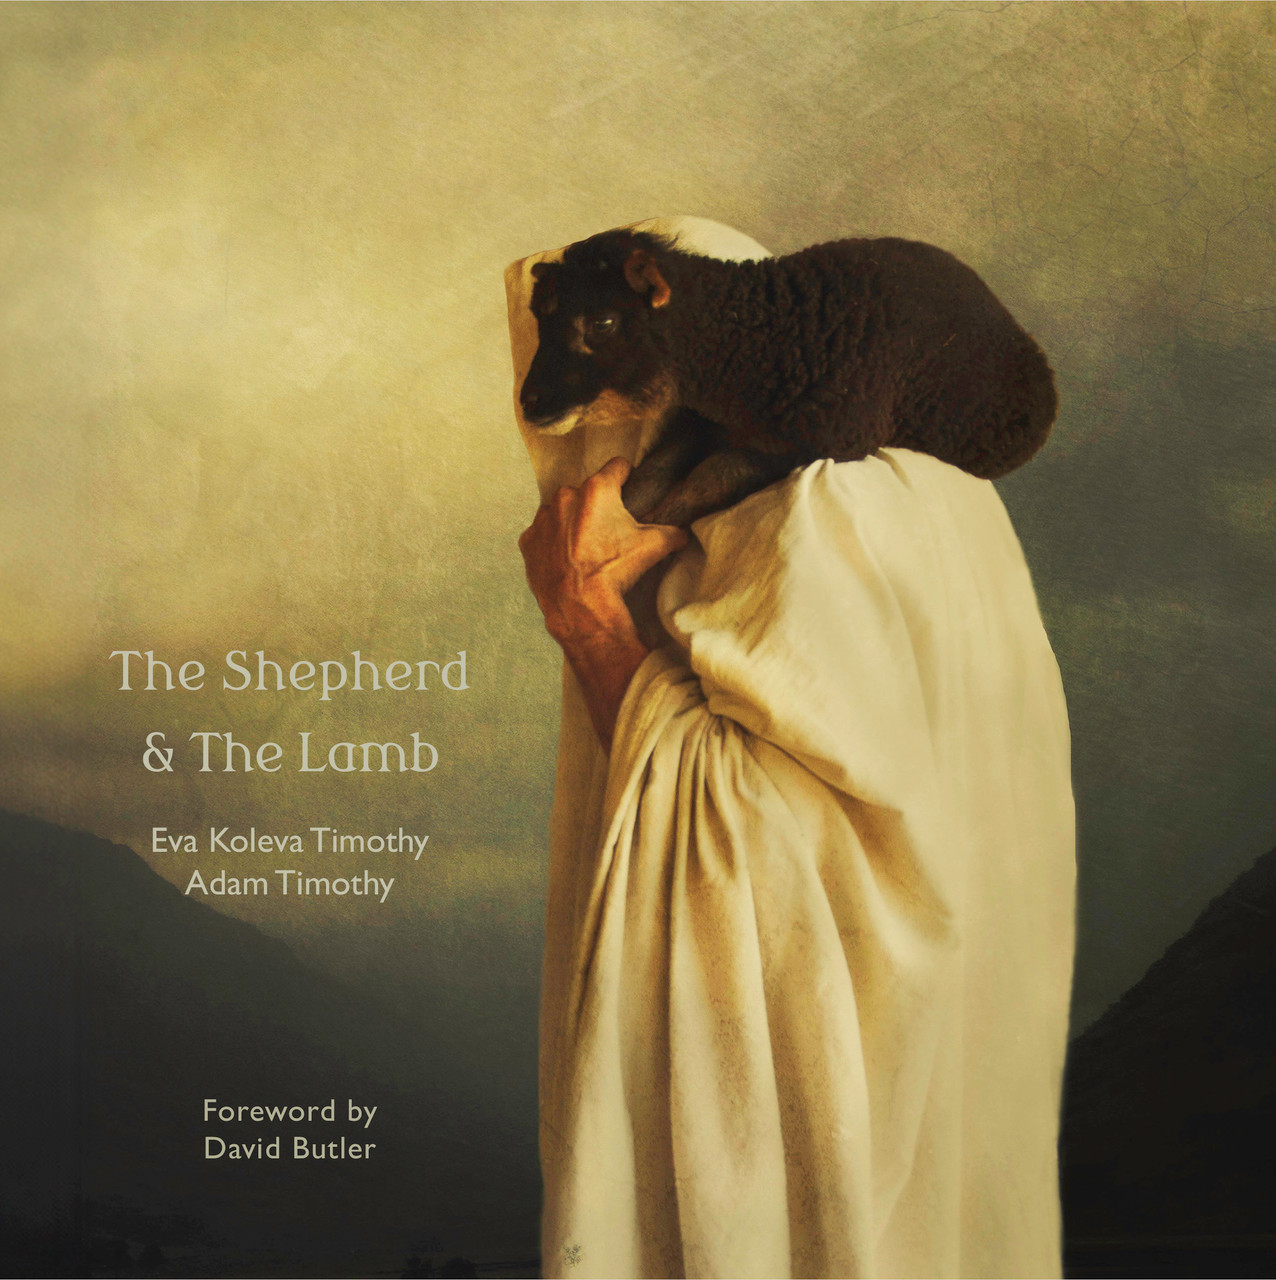 The Shepherd & The Lamb